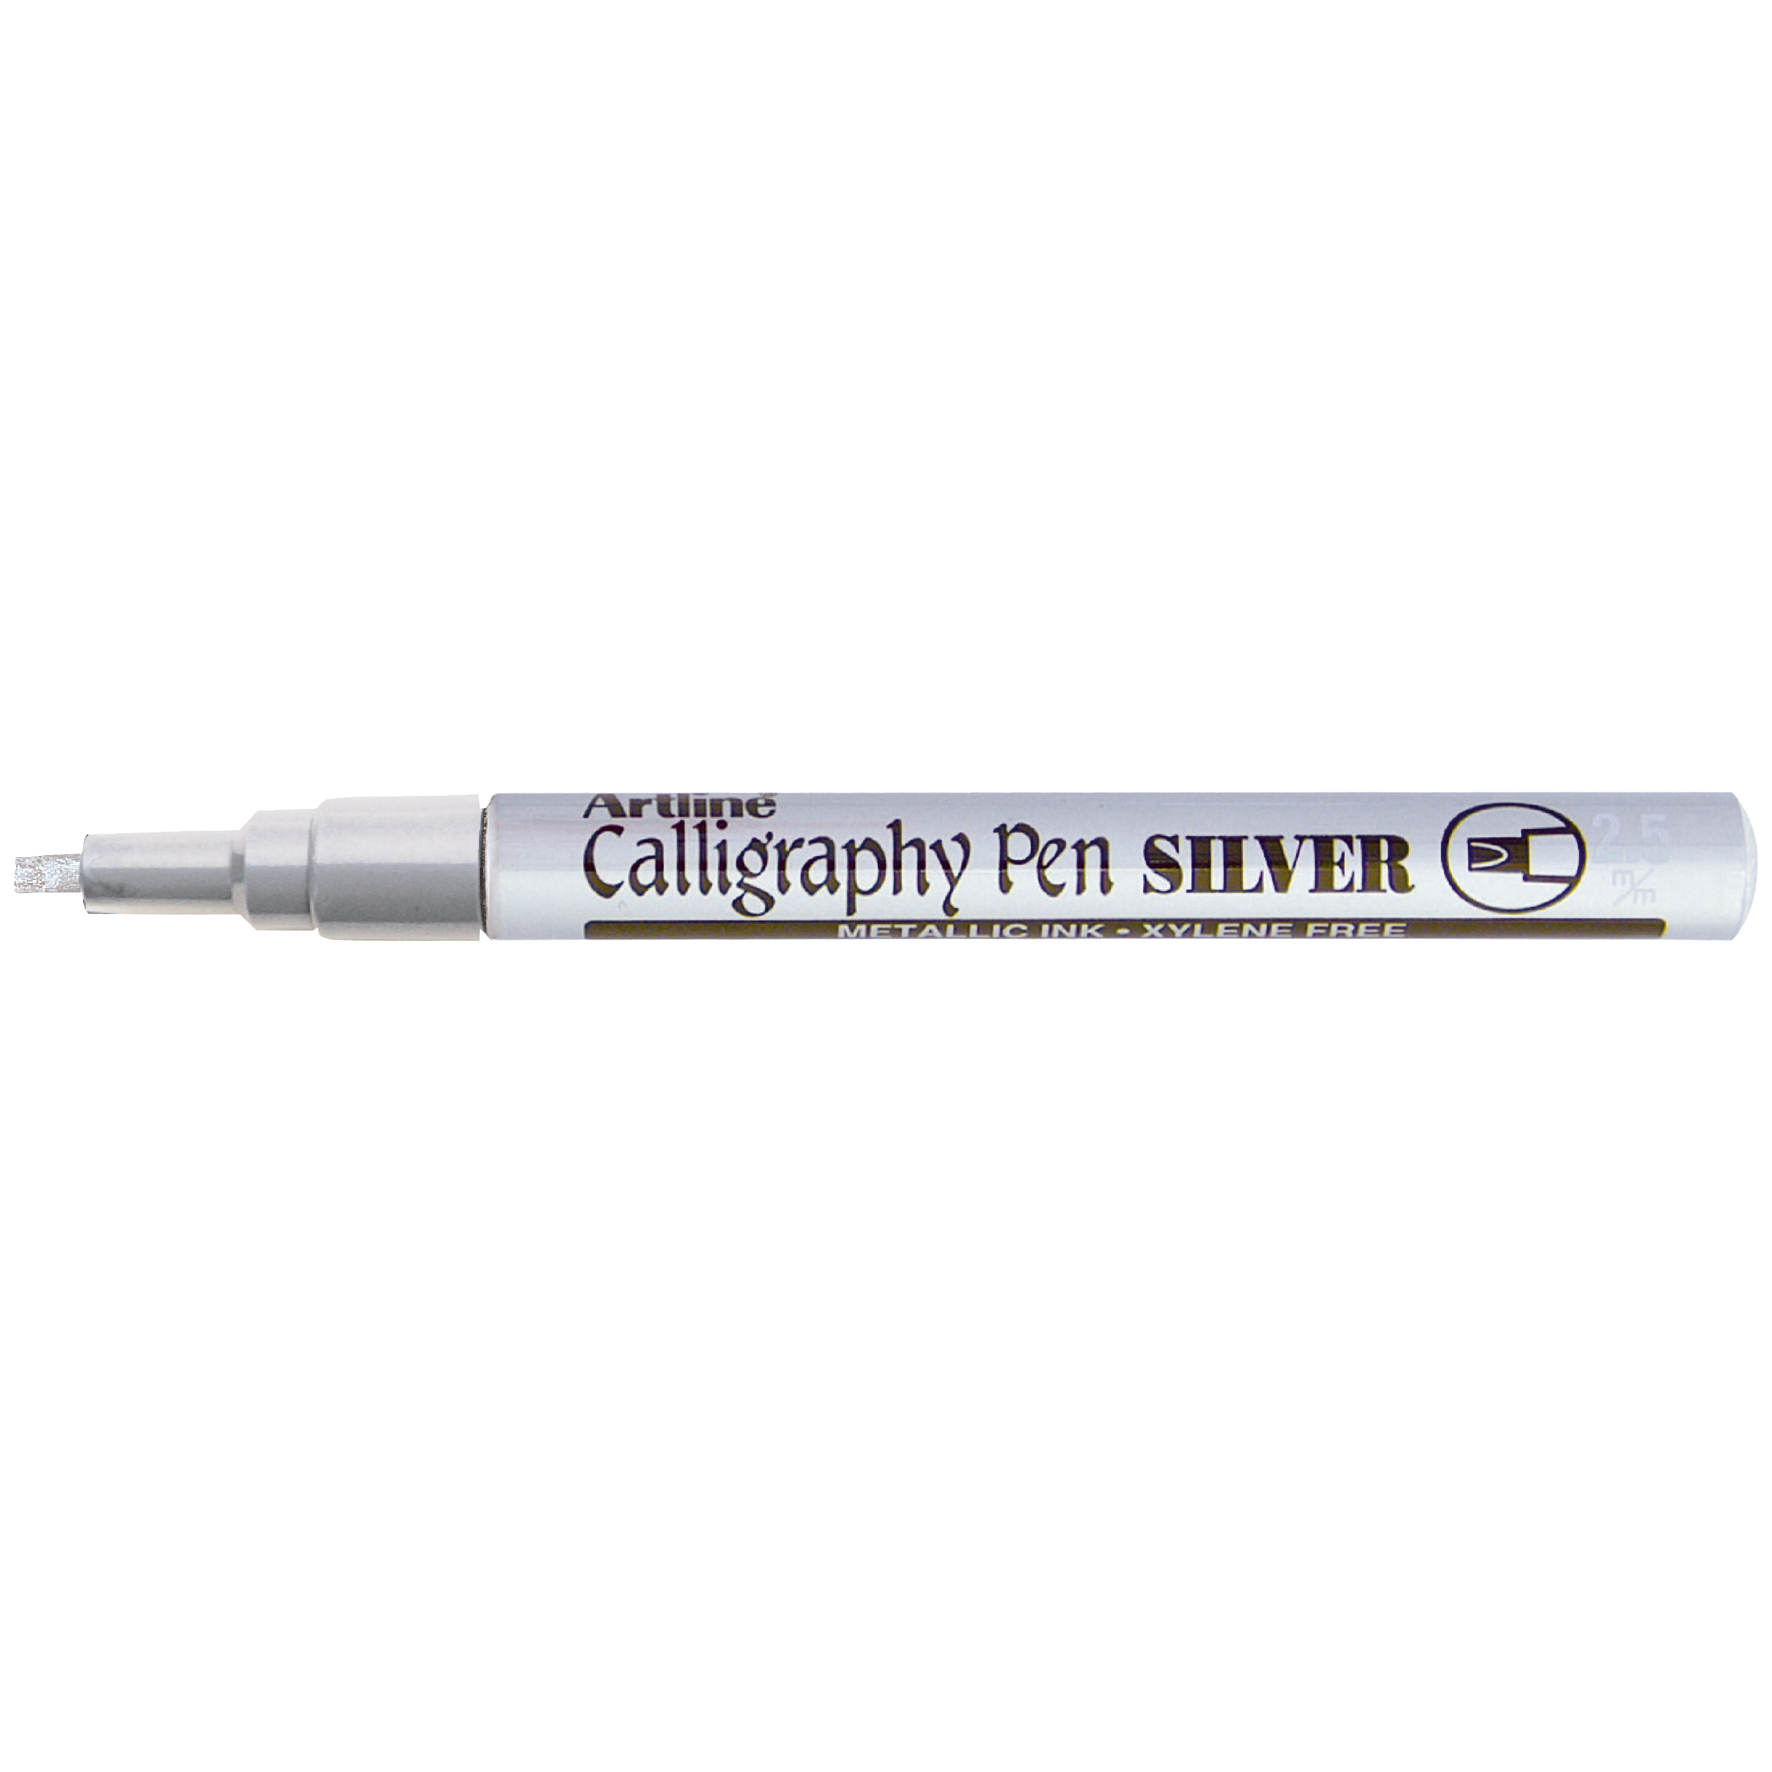 [2208338] Kalligrafi Artline 2,5 silver